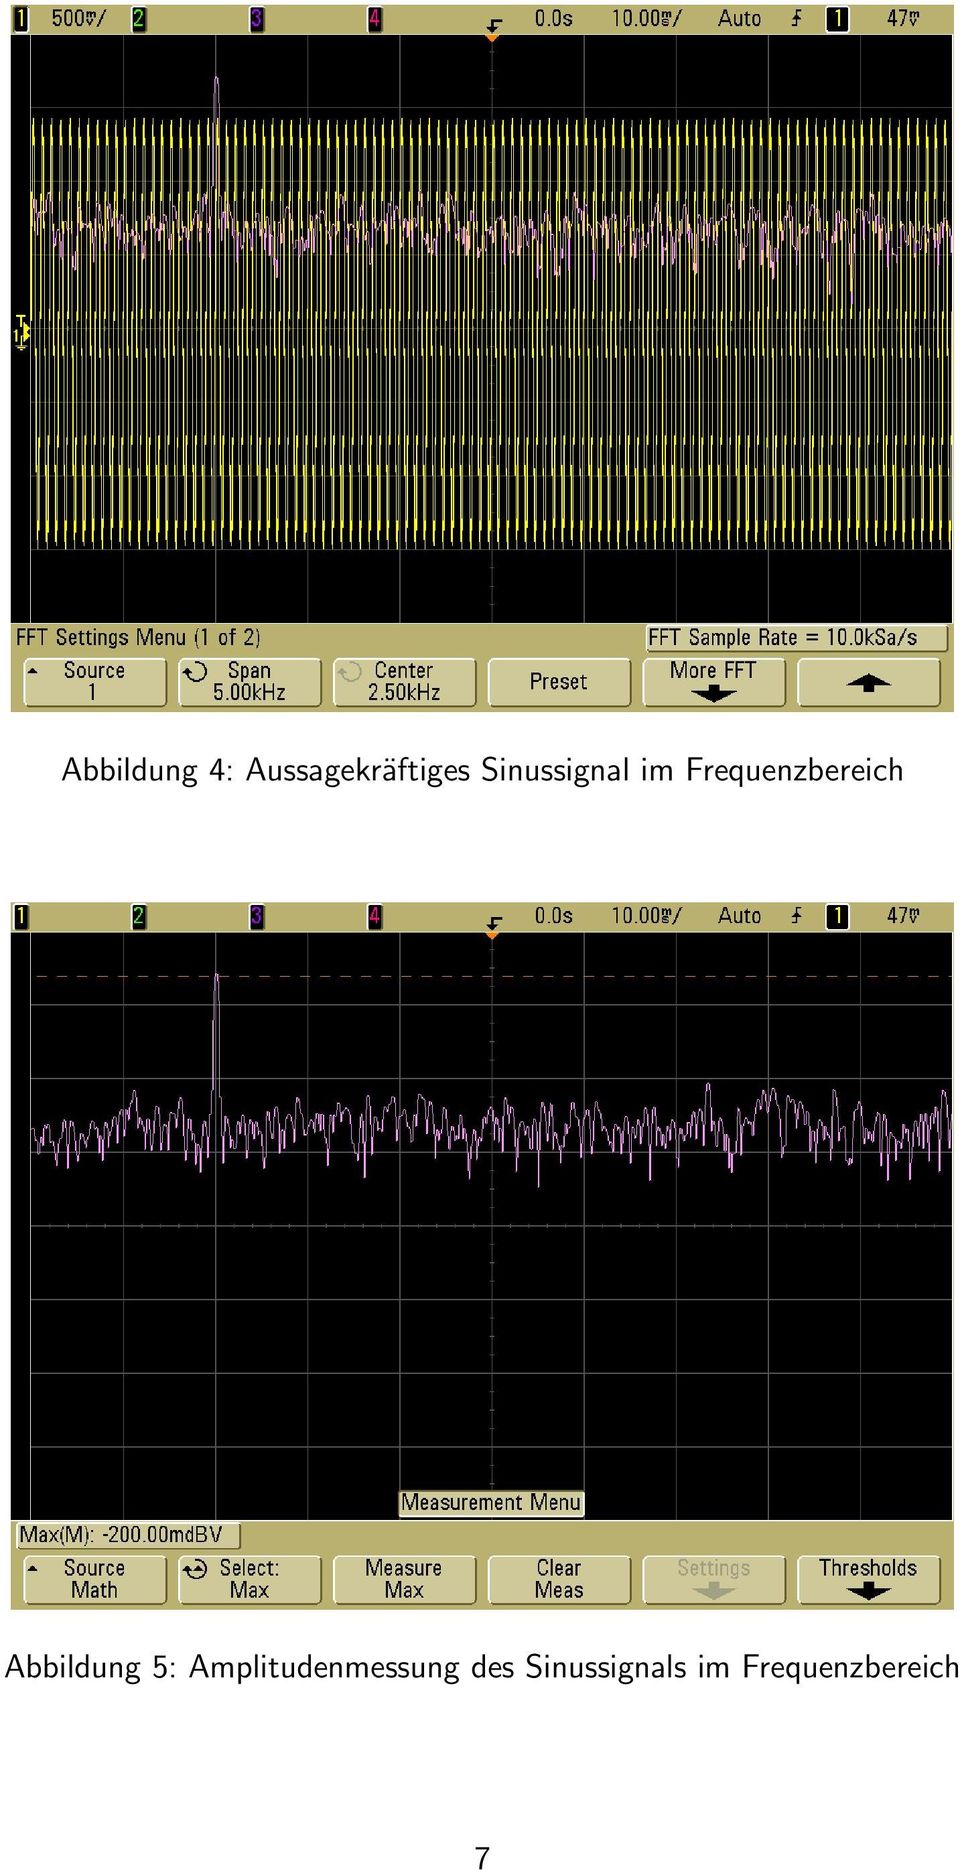 Abbildung 5: Amplitudenmessung